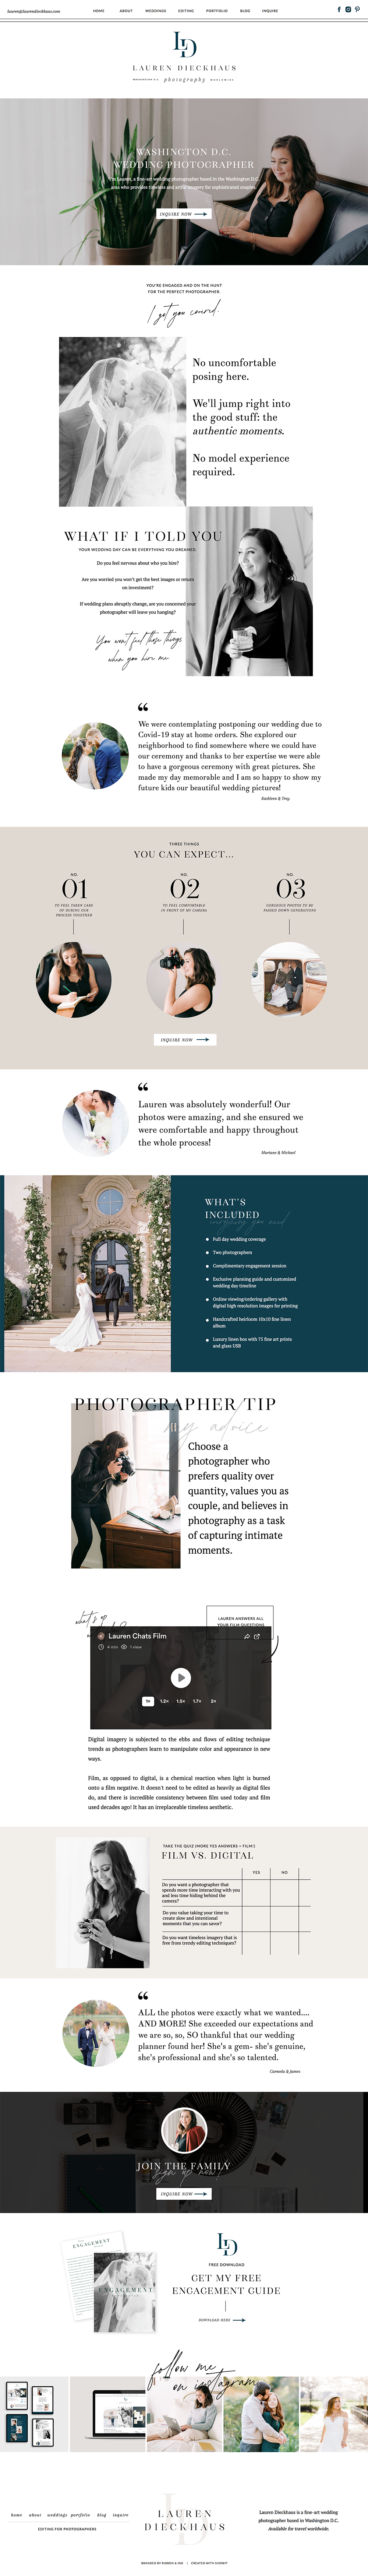 custom showit website for wedding photographer / editorial / modern / template